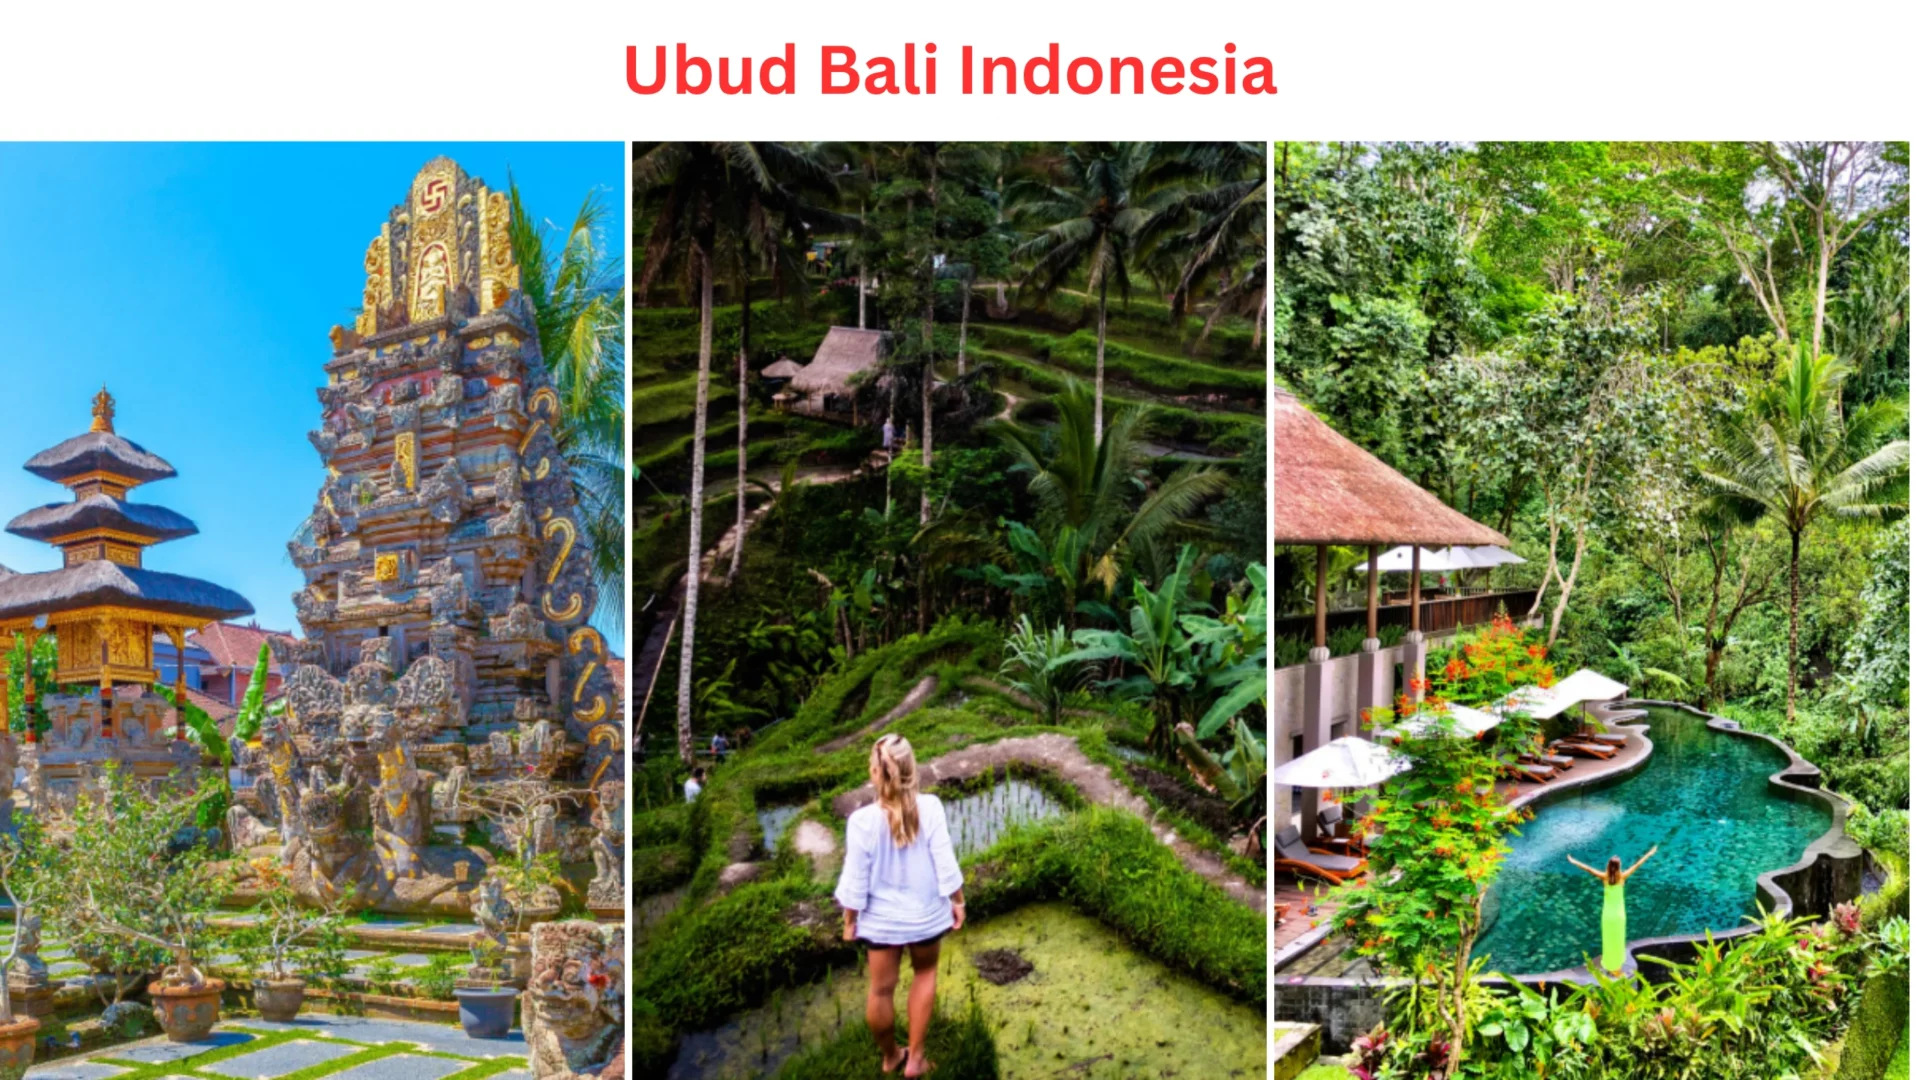 Solo Travel Destination: Ubud Bali, Indonesia